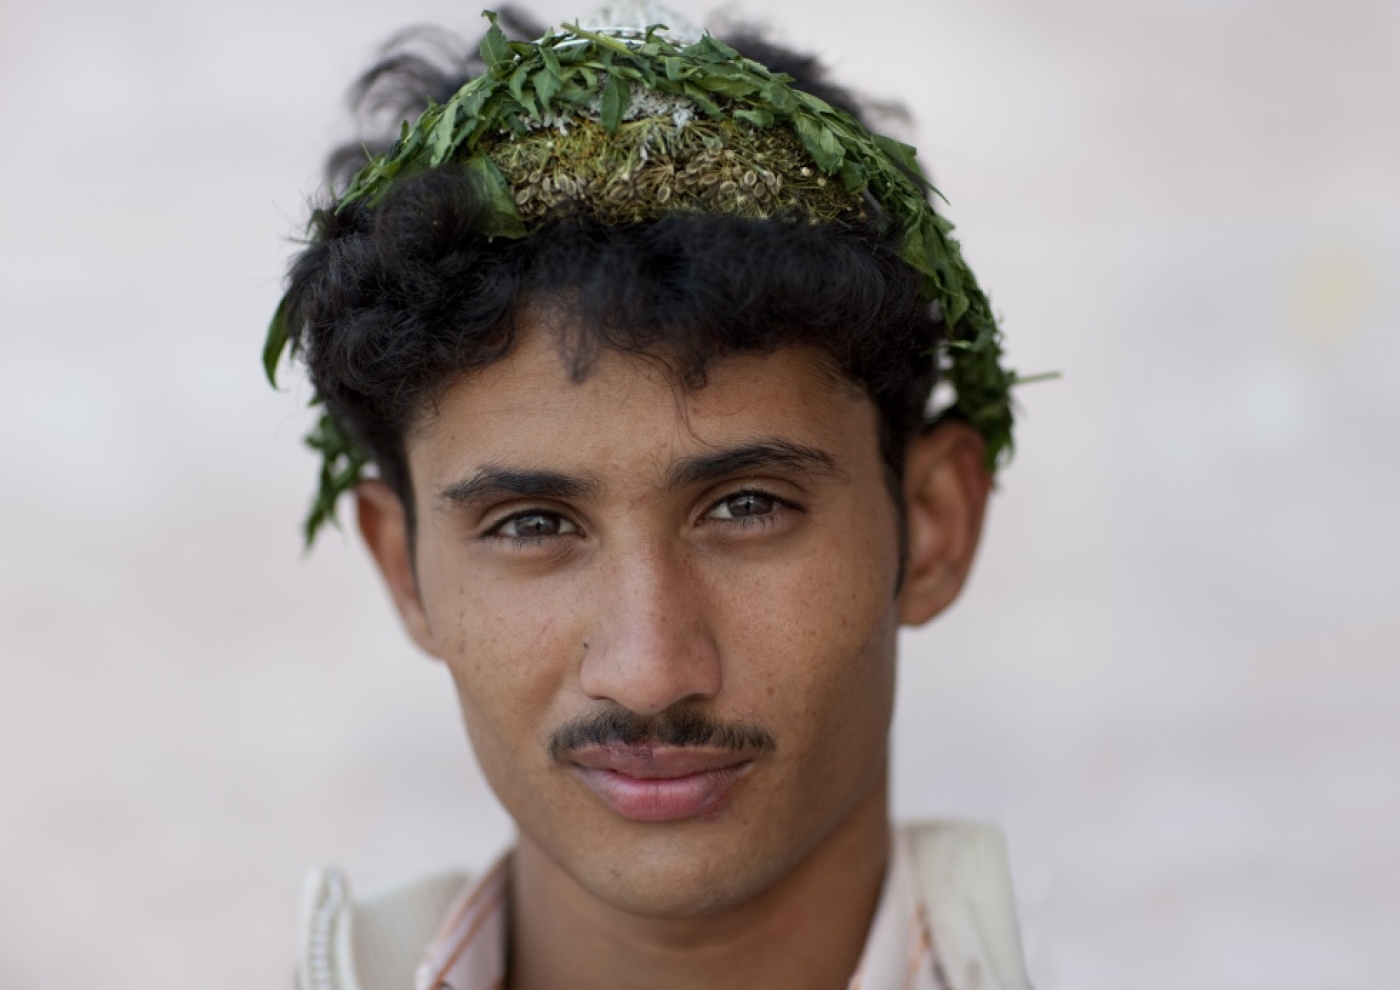 The flower men of Saudi Arabia | Middle East Eye